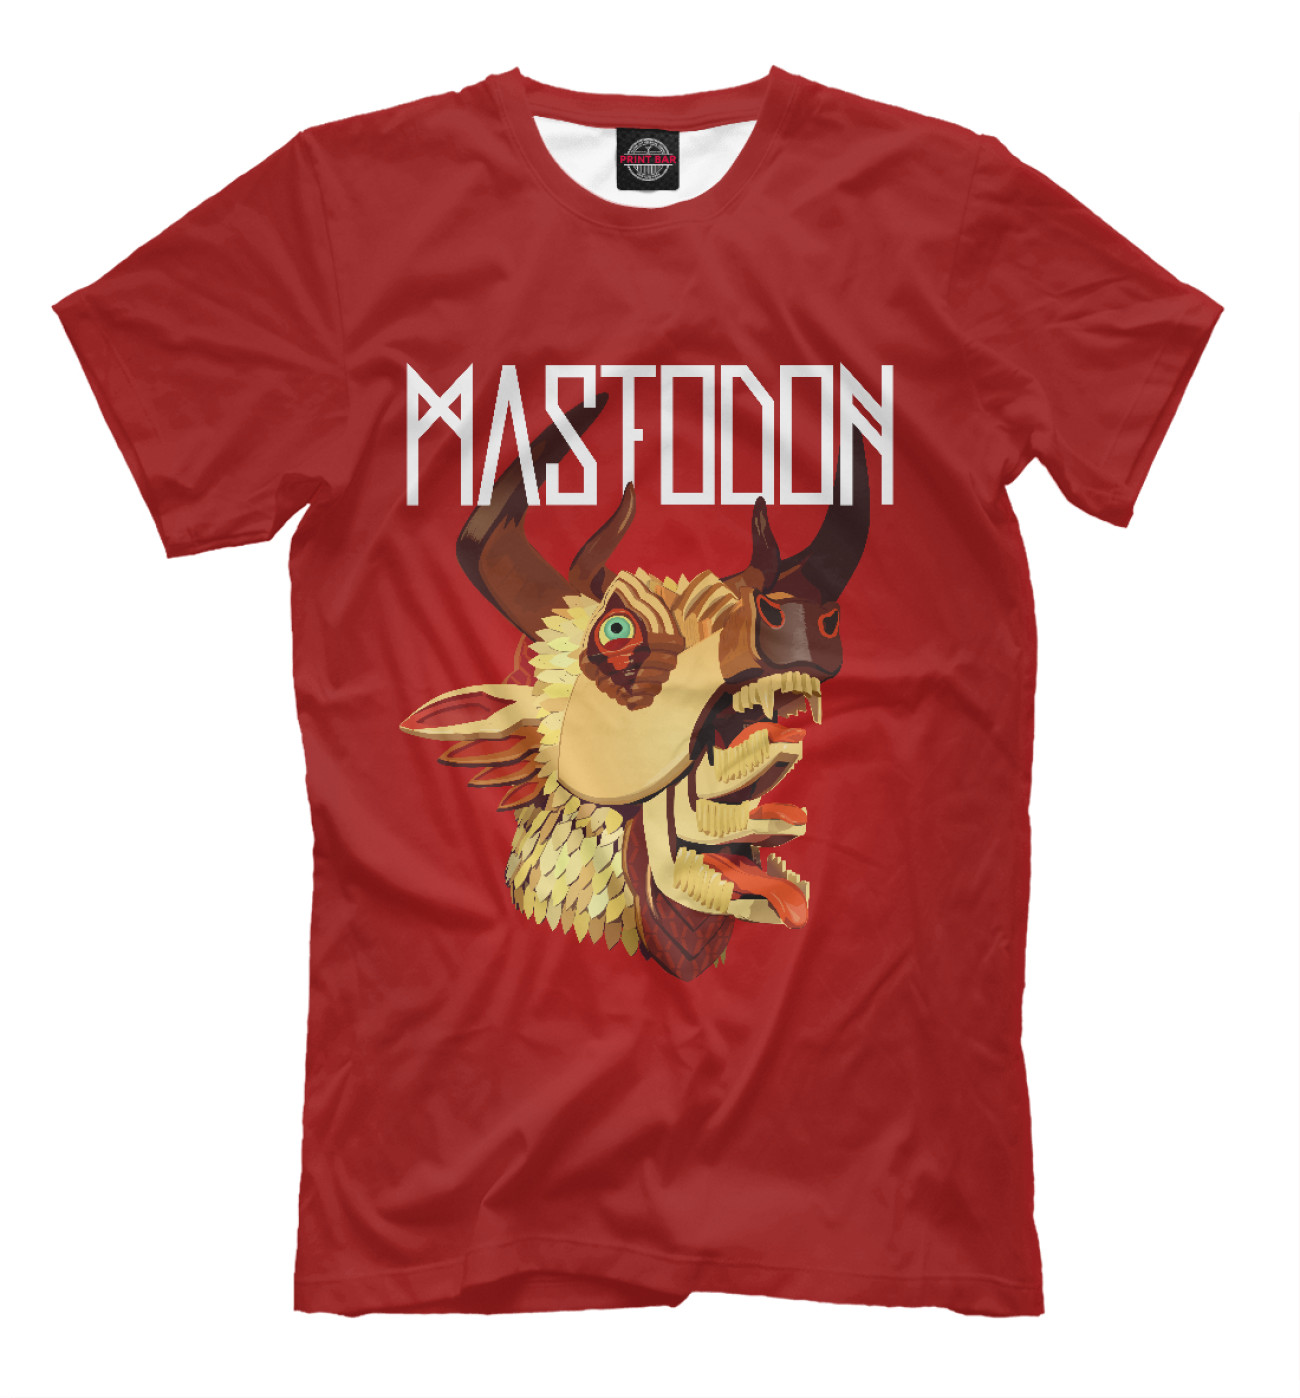 Мужская Футболка Mastodon, артикул: MSN-434902-fut-2